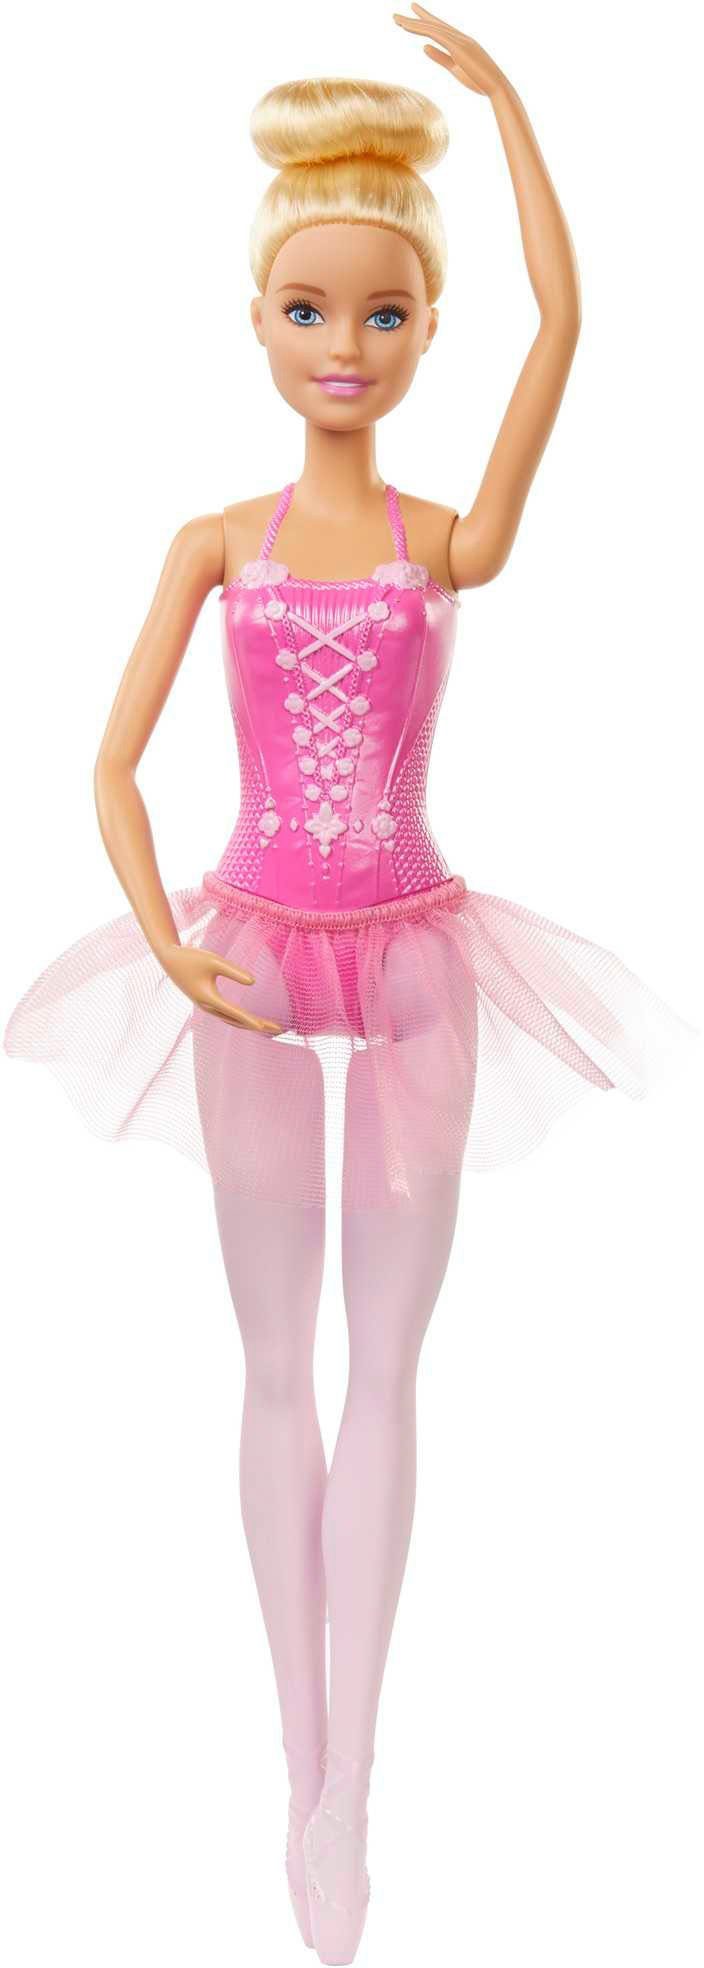 (blond) Barbie Ballerina-Puppe Anziehpuppe